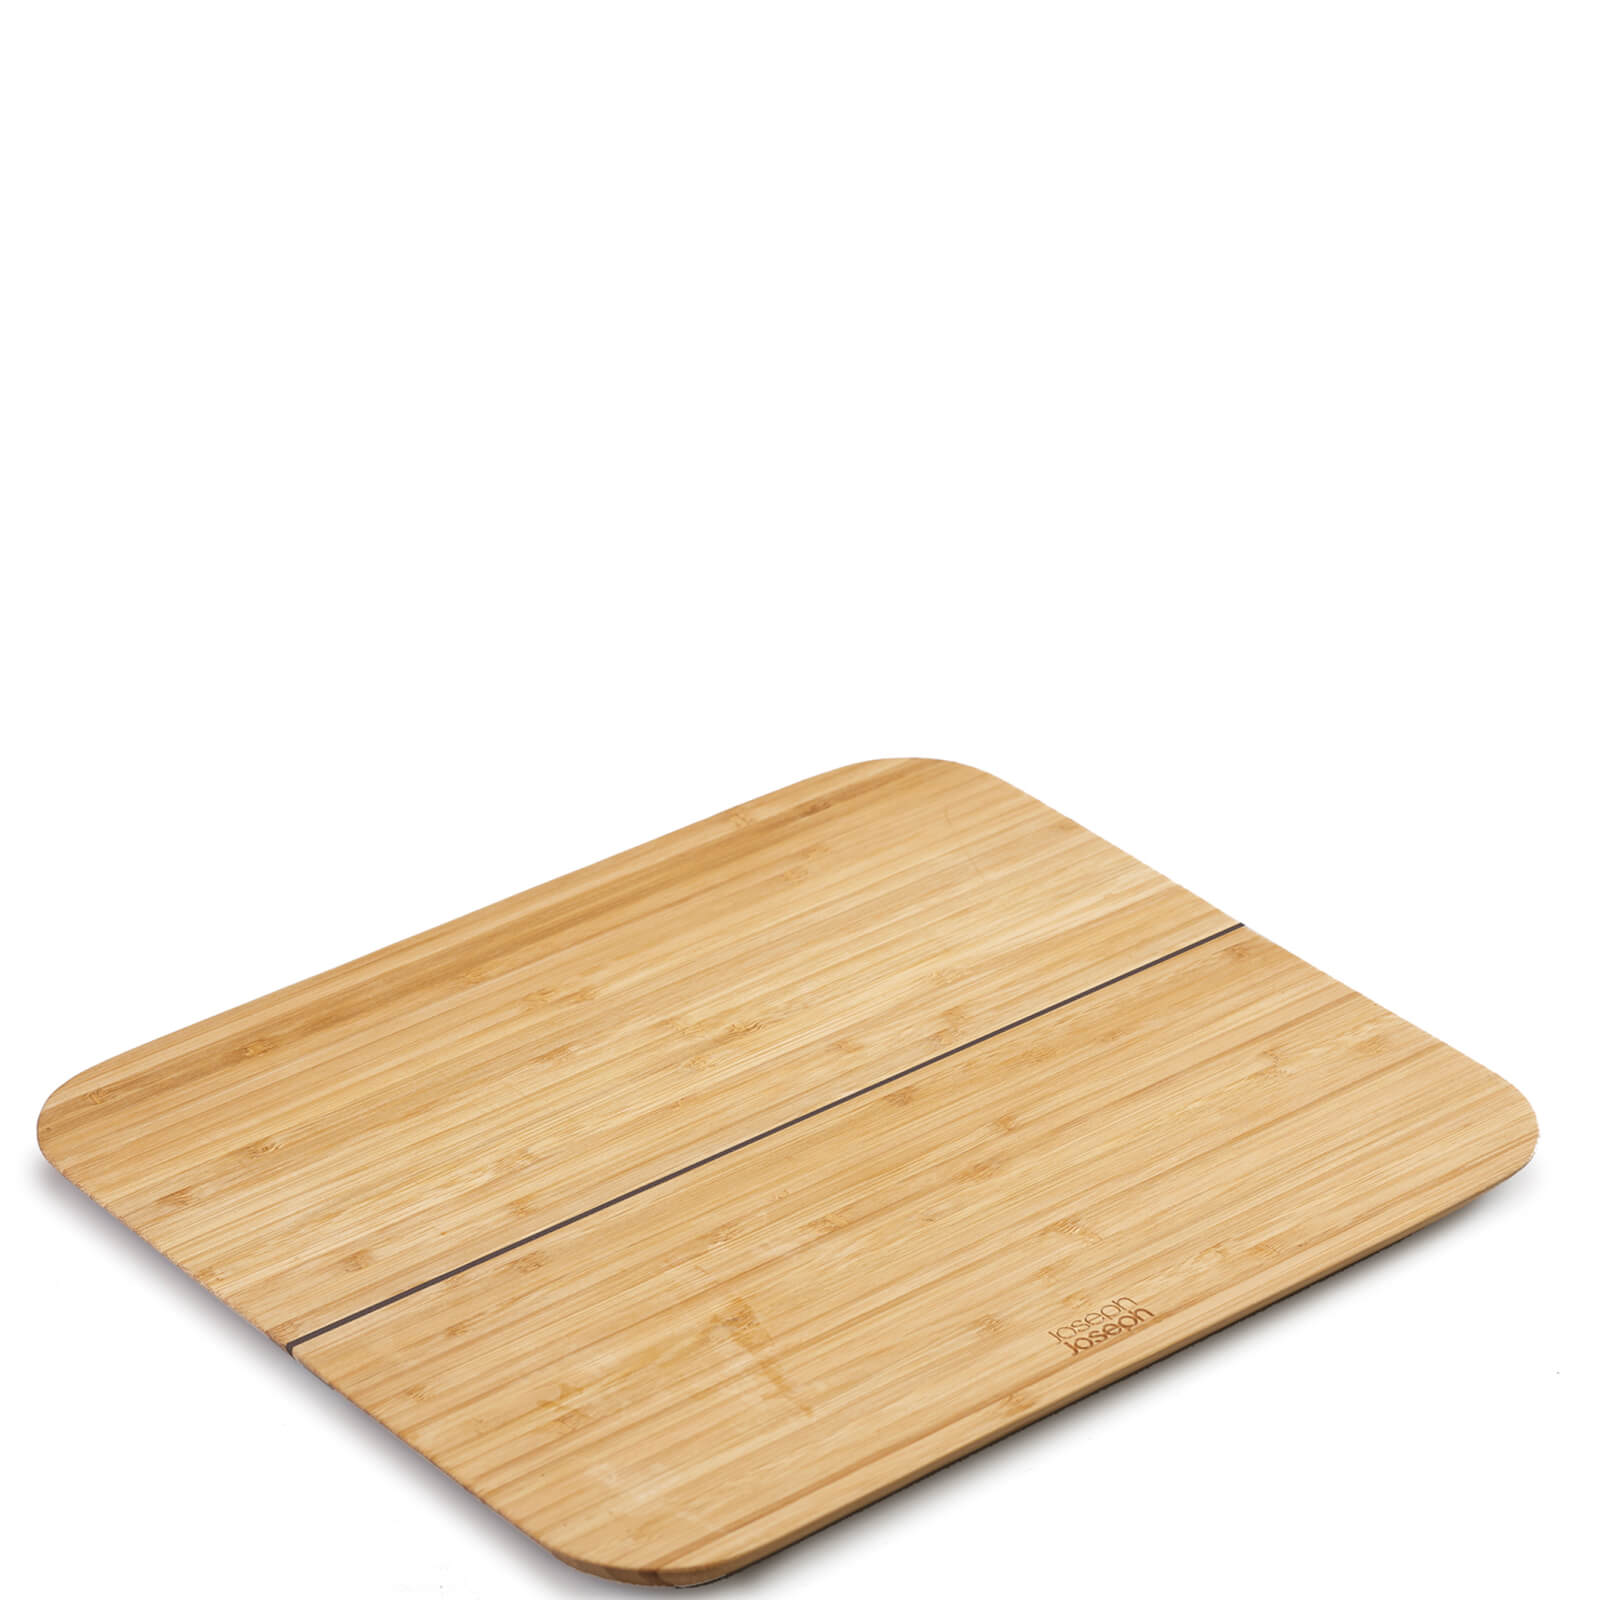 Joseph Joseph Chop2Pot Bamboo Chopping Board - Small